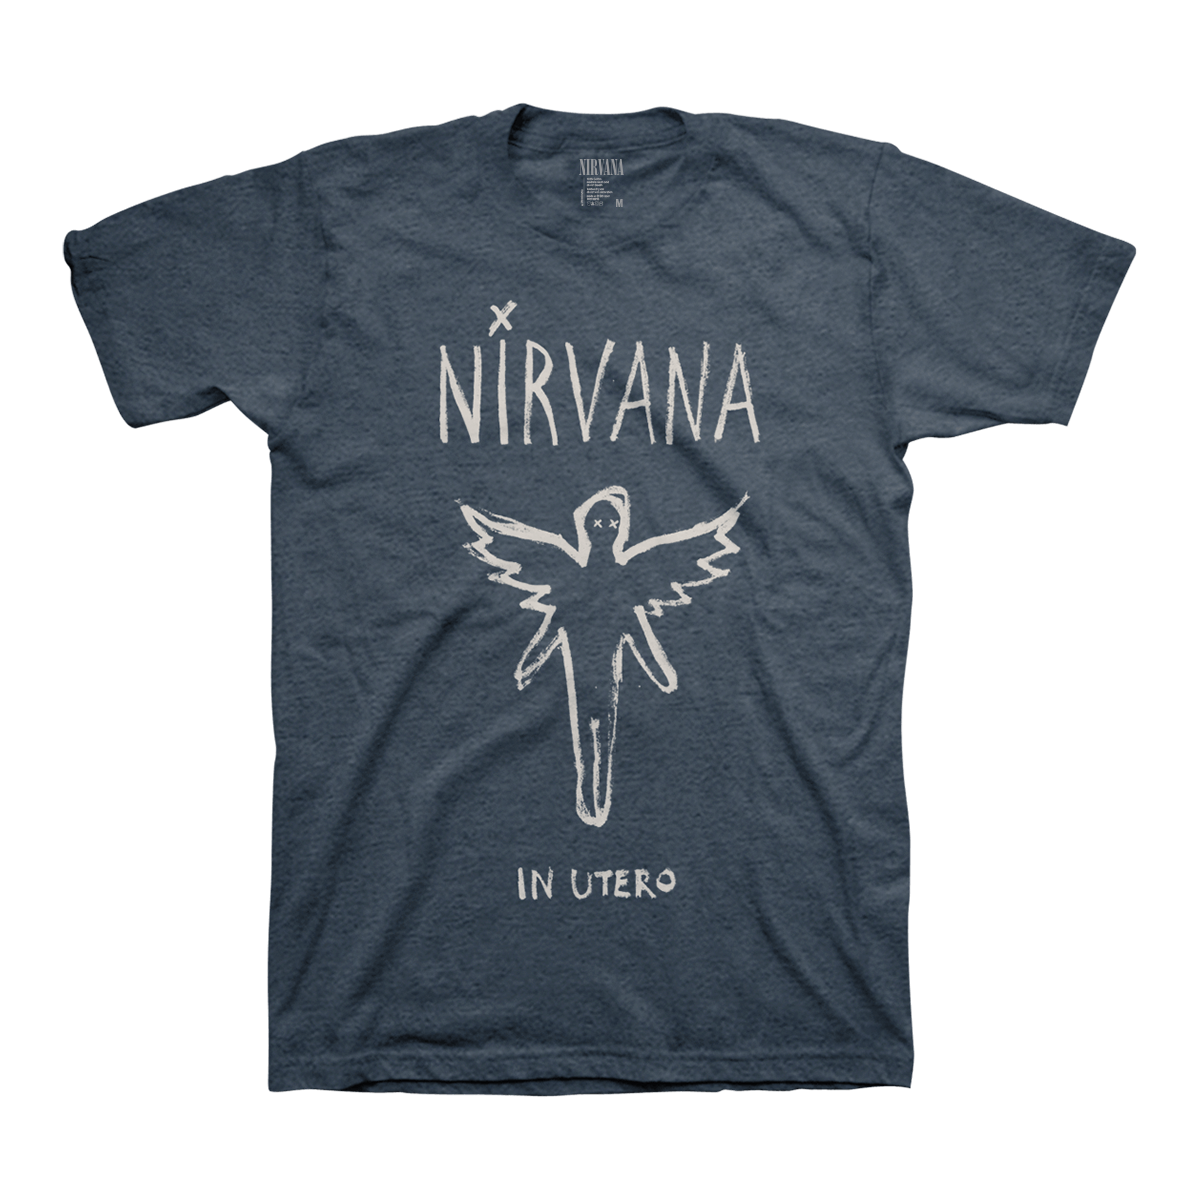 HTR BLU UTERO - Nirvana Store